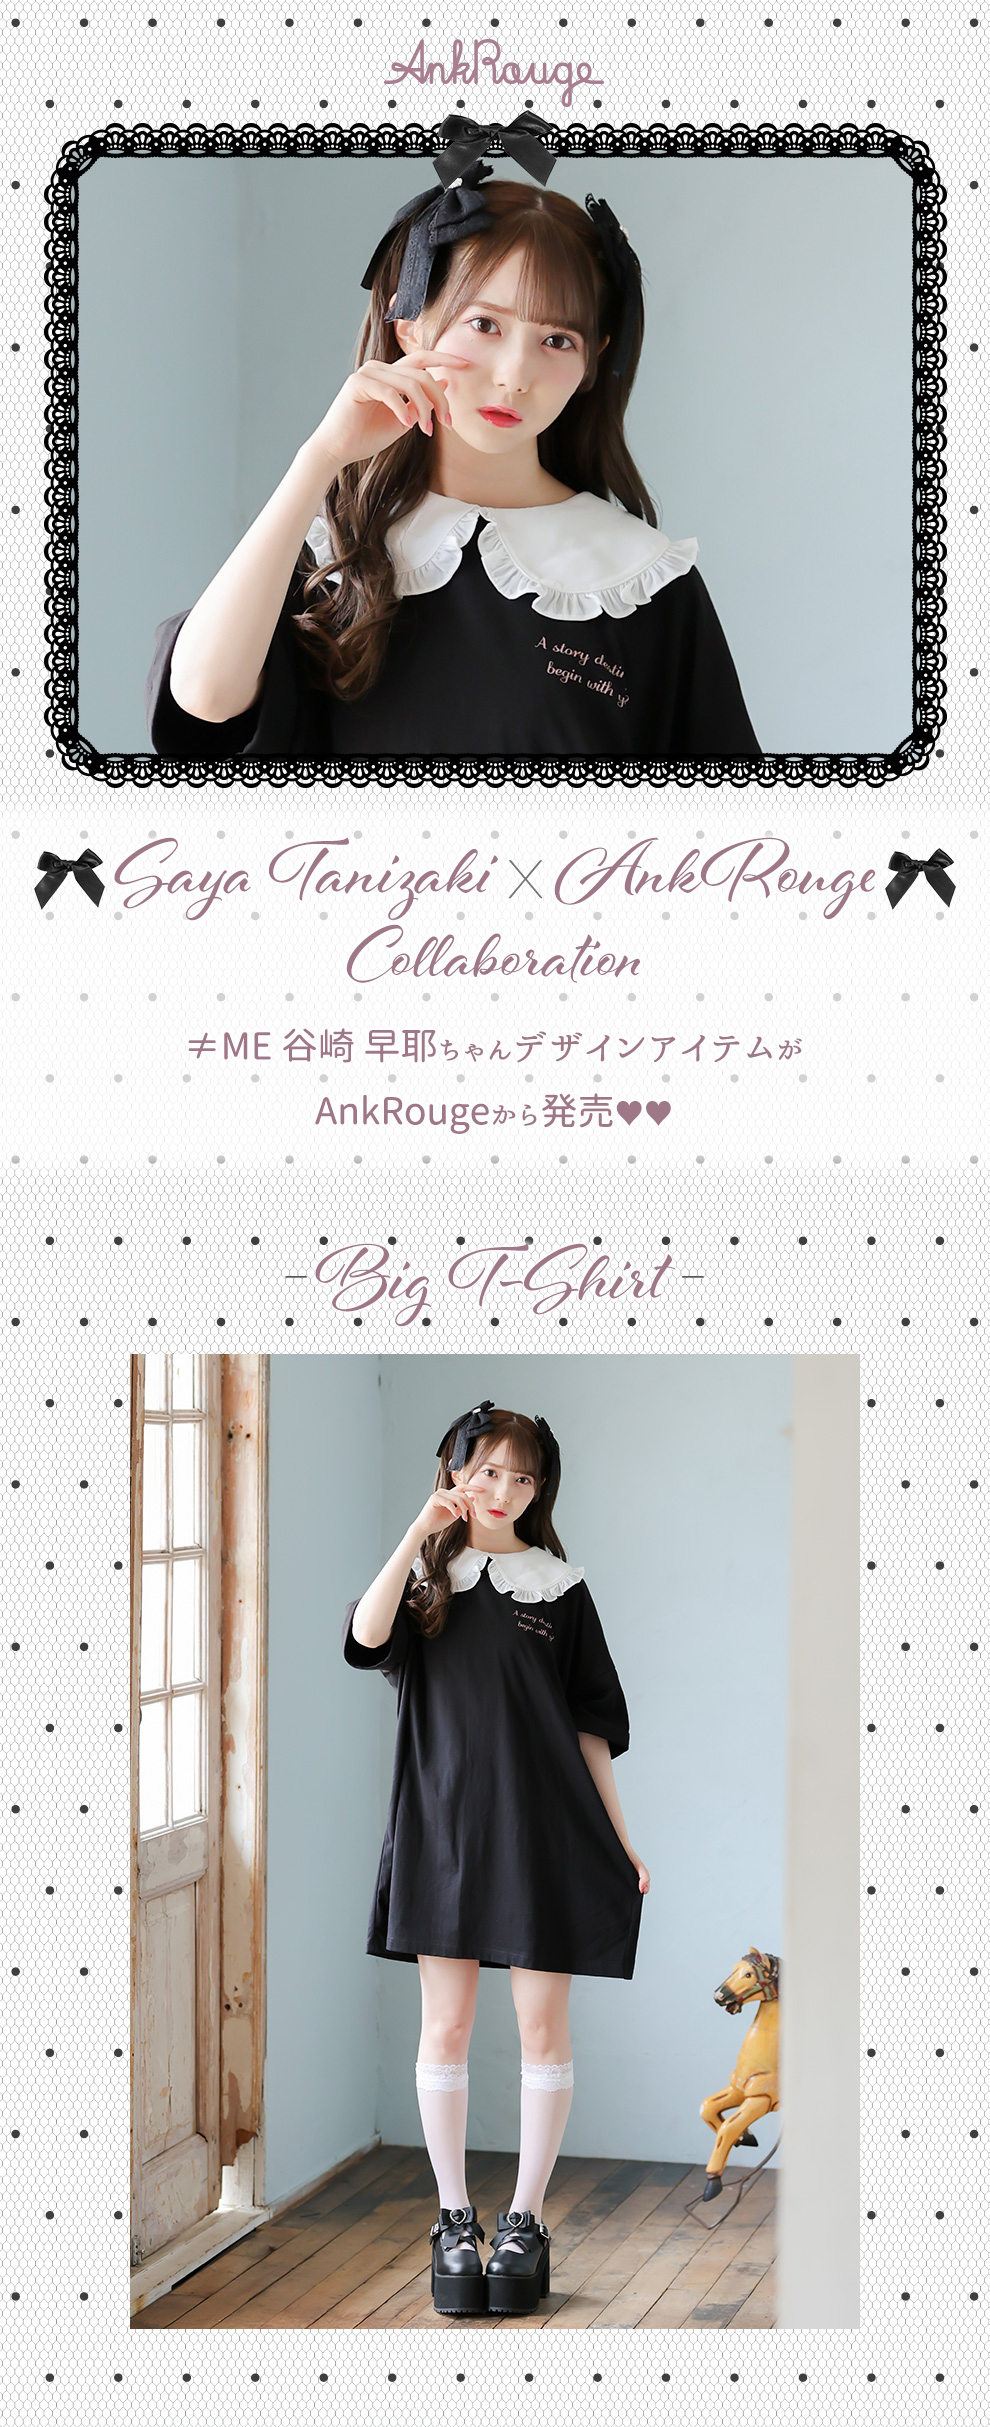 Saya Tanigaki × Ank Rouge Collaboration